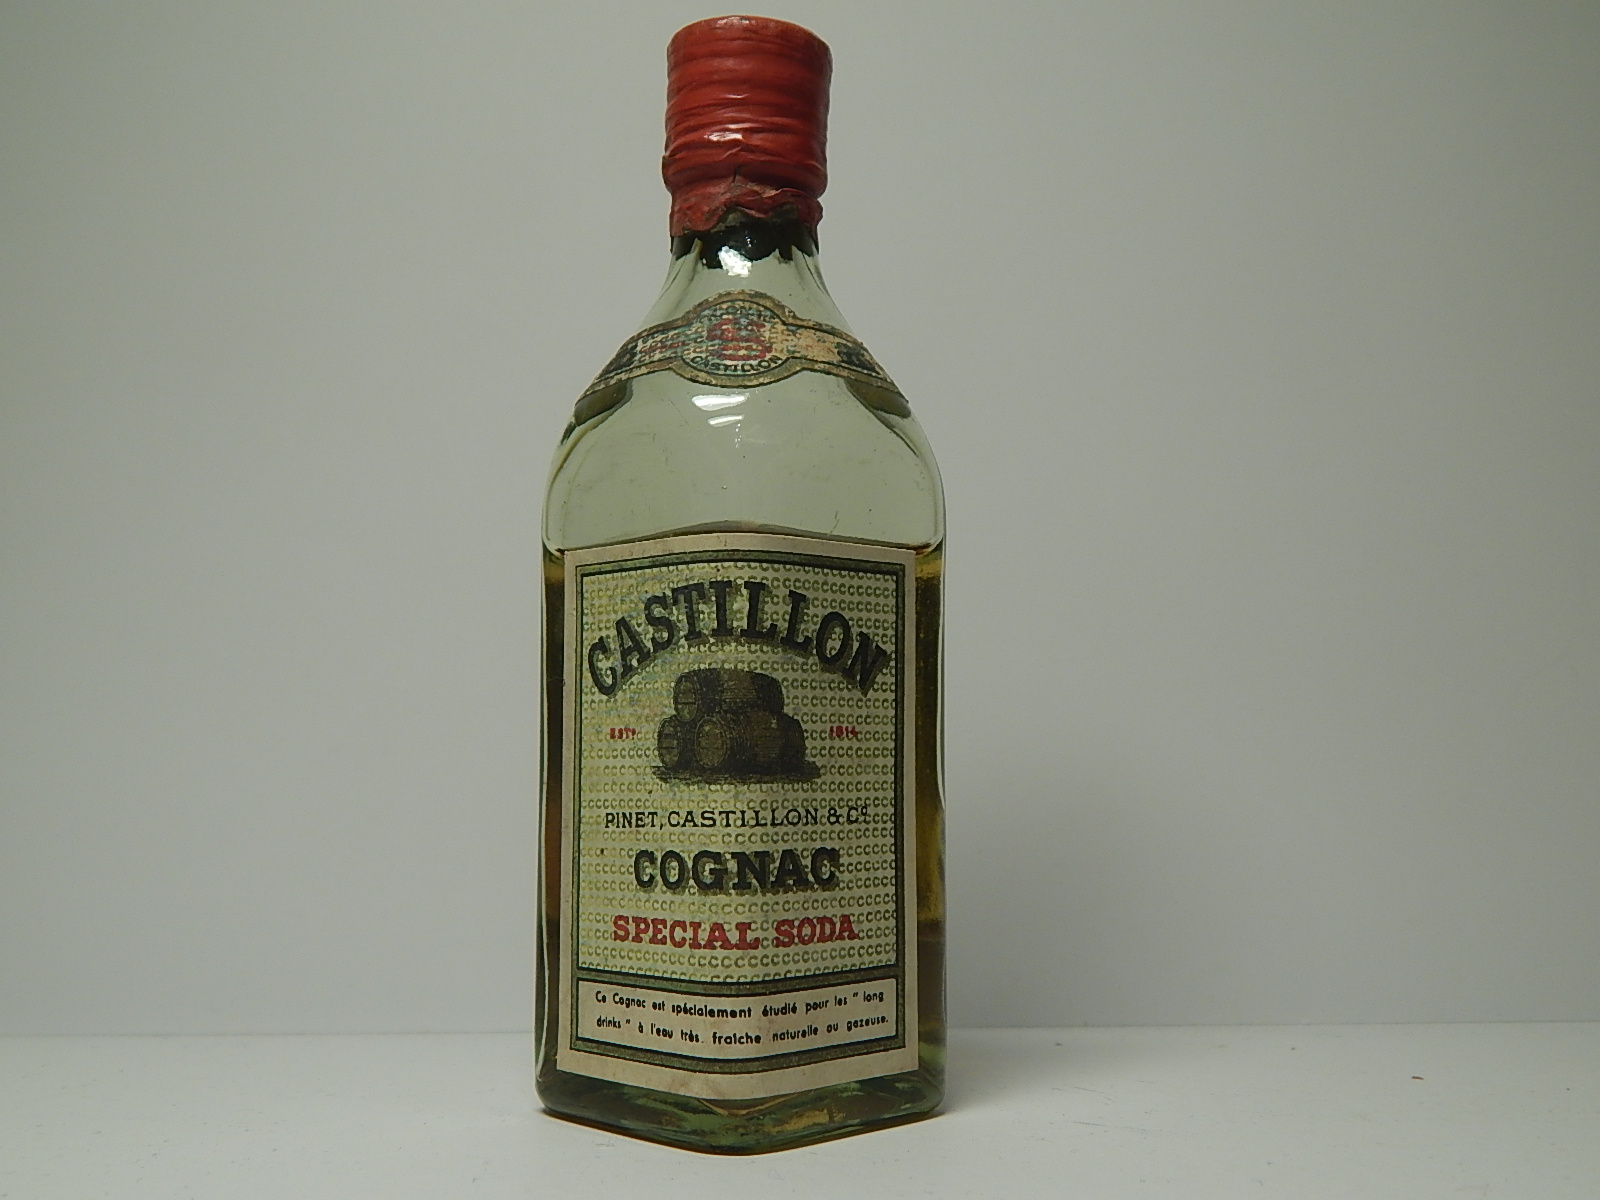 CASTILLON Special Soda Cognac